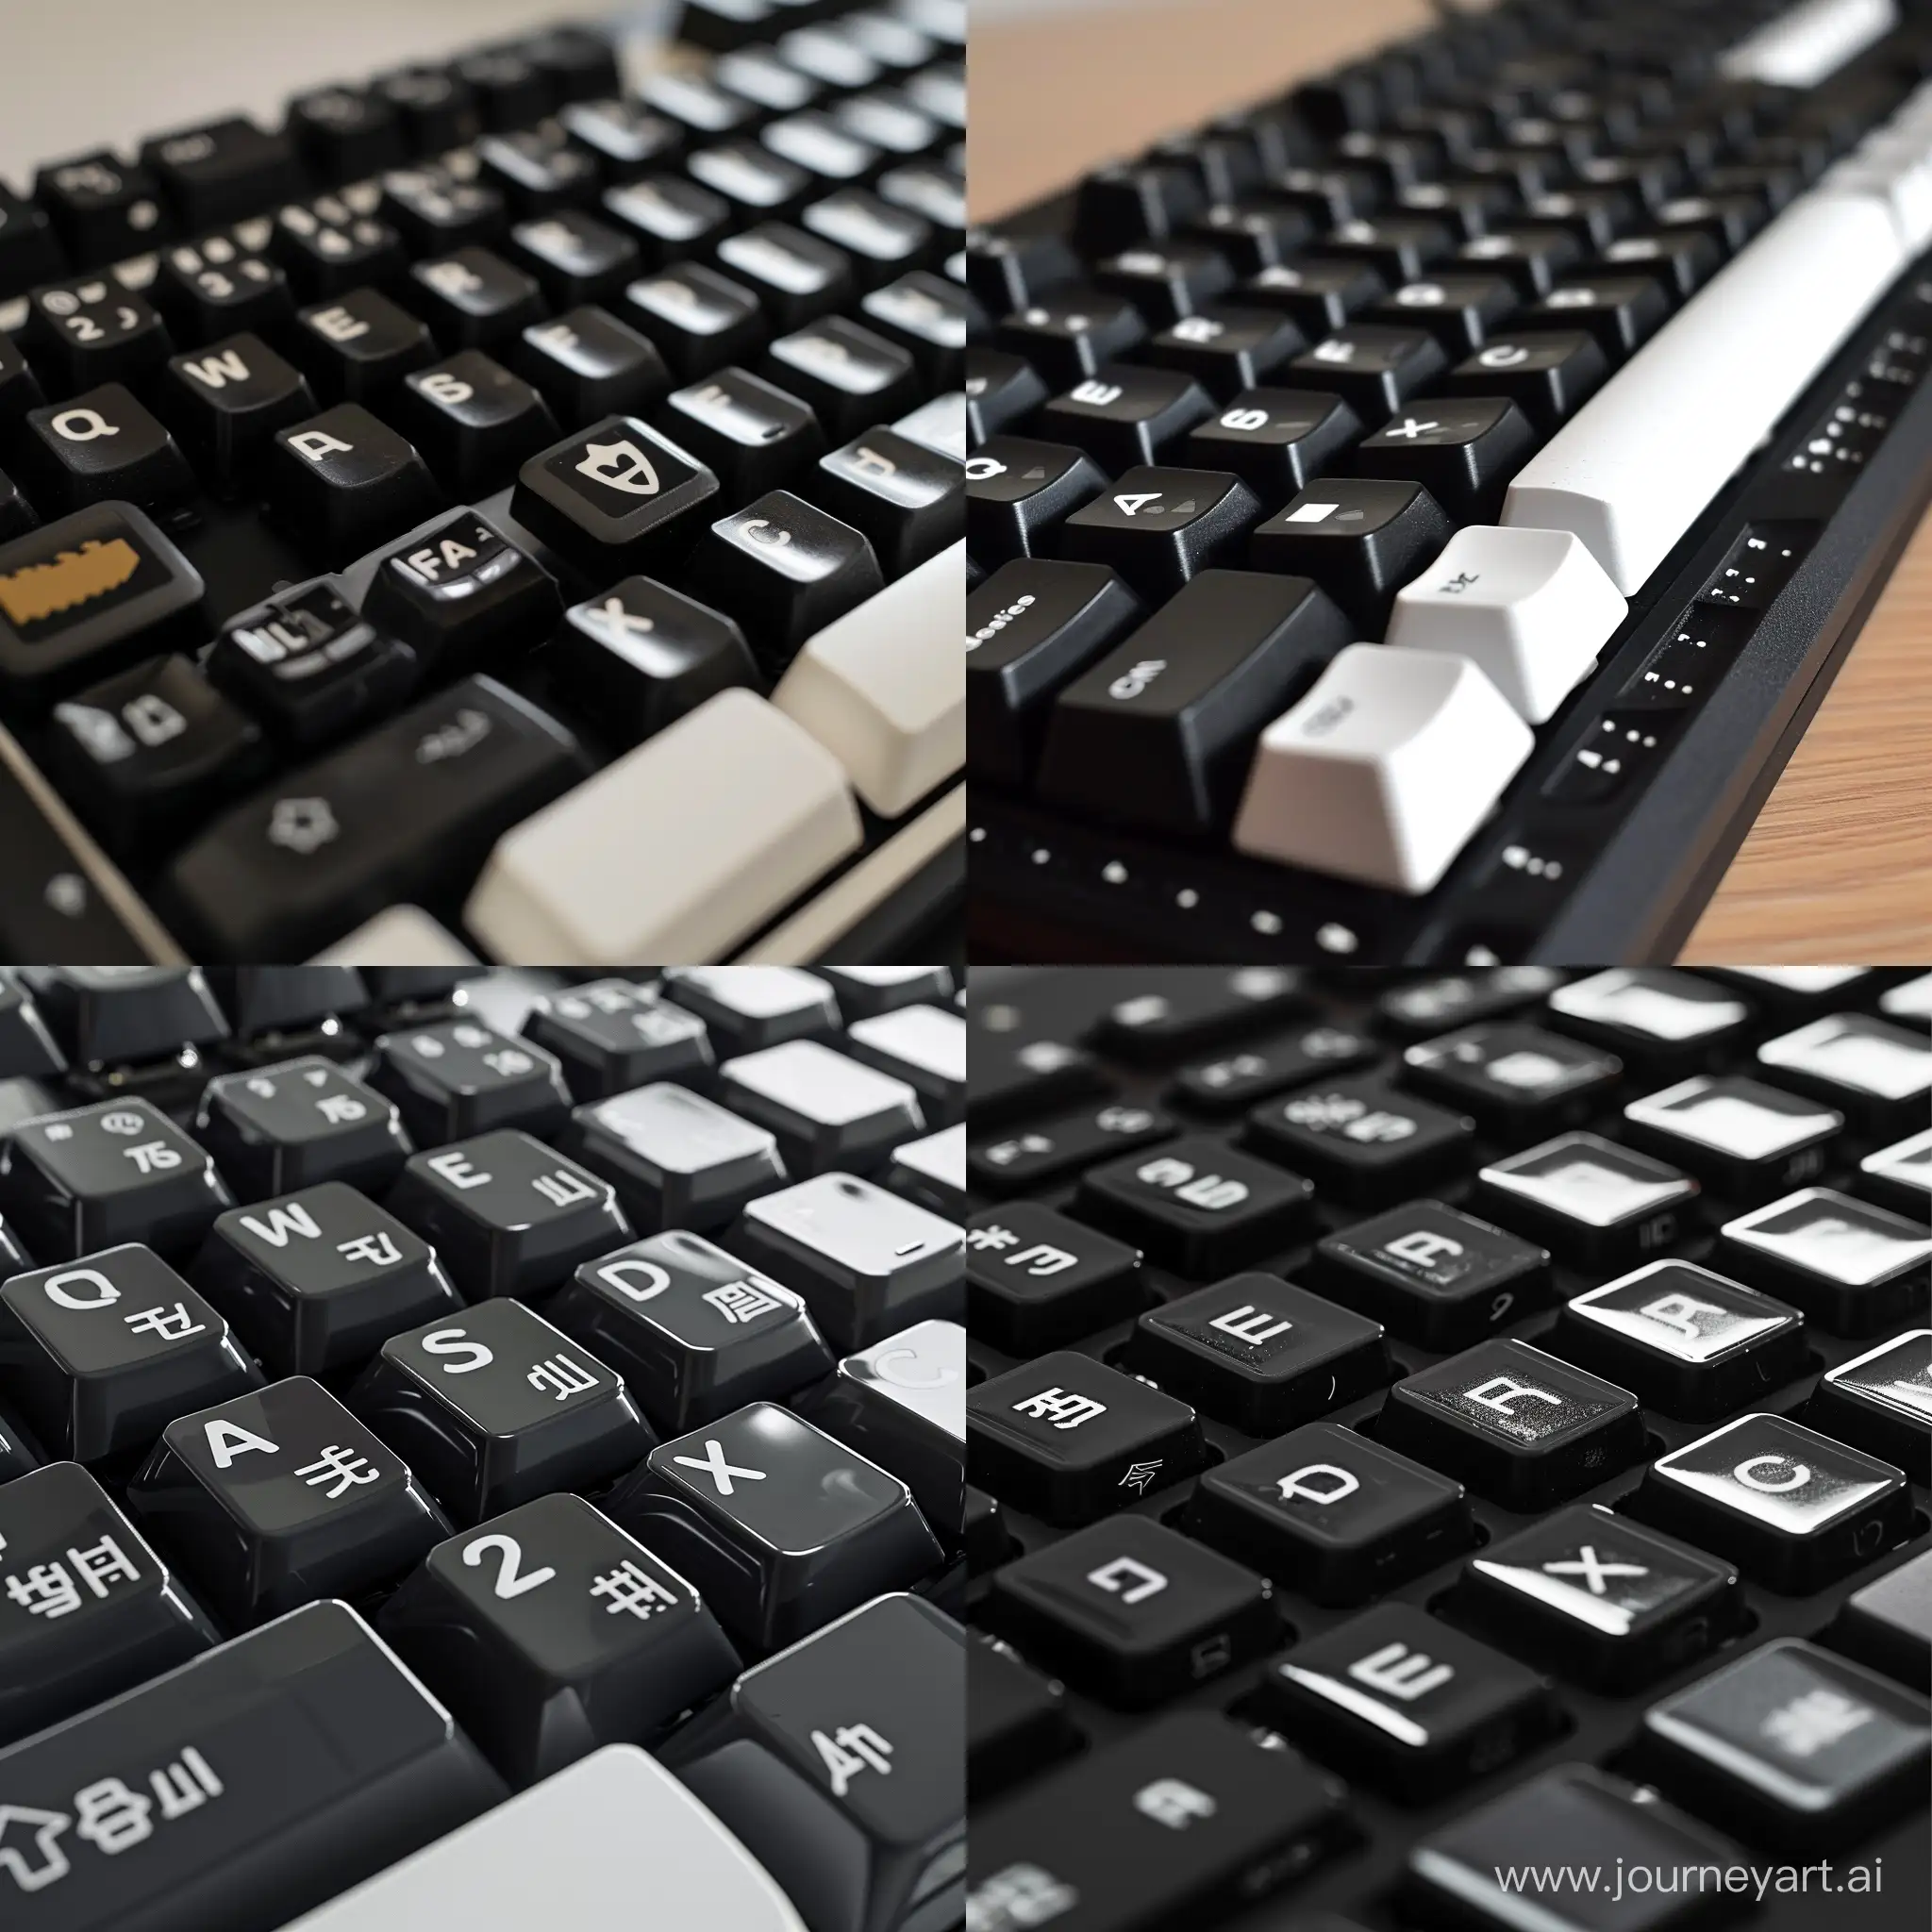 Bilingual-Computing-Closeup-of-Black-and-White-Keyboard-with-Cyrillic-and-Latin-Characters